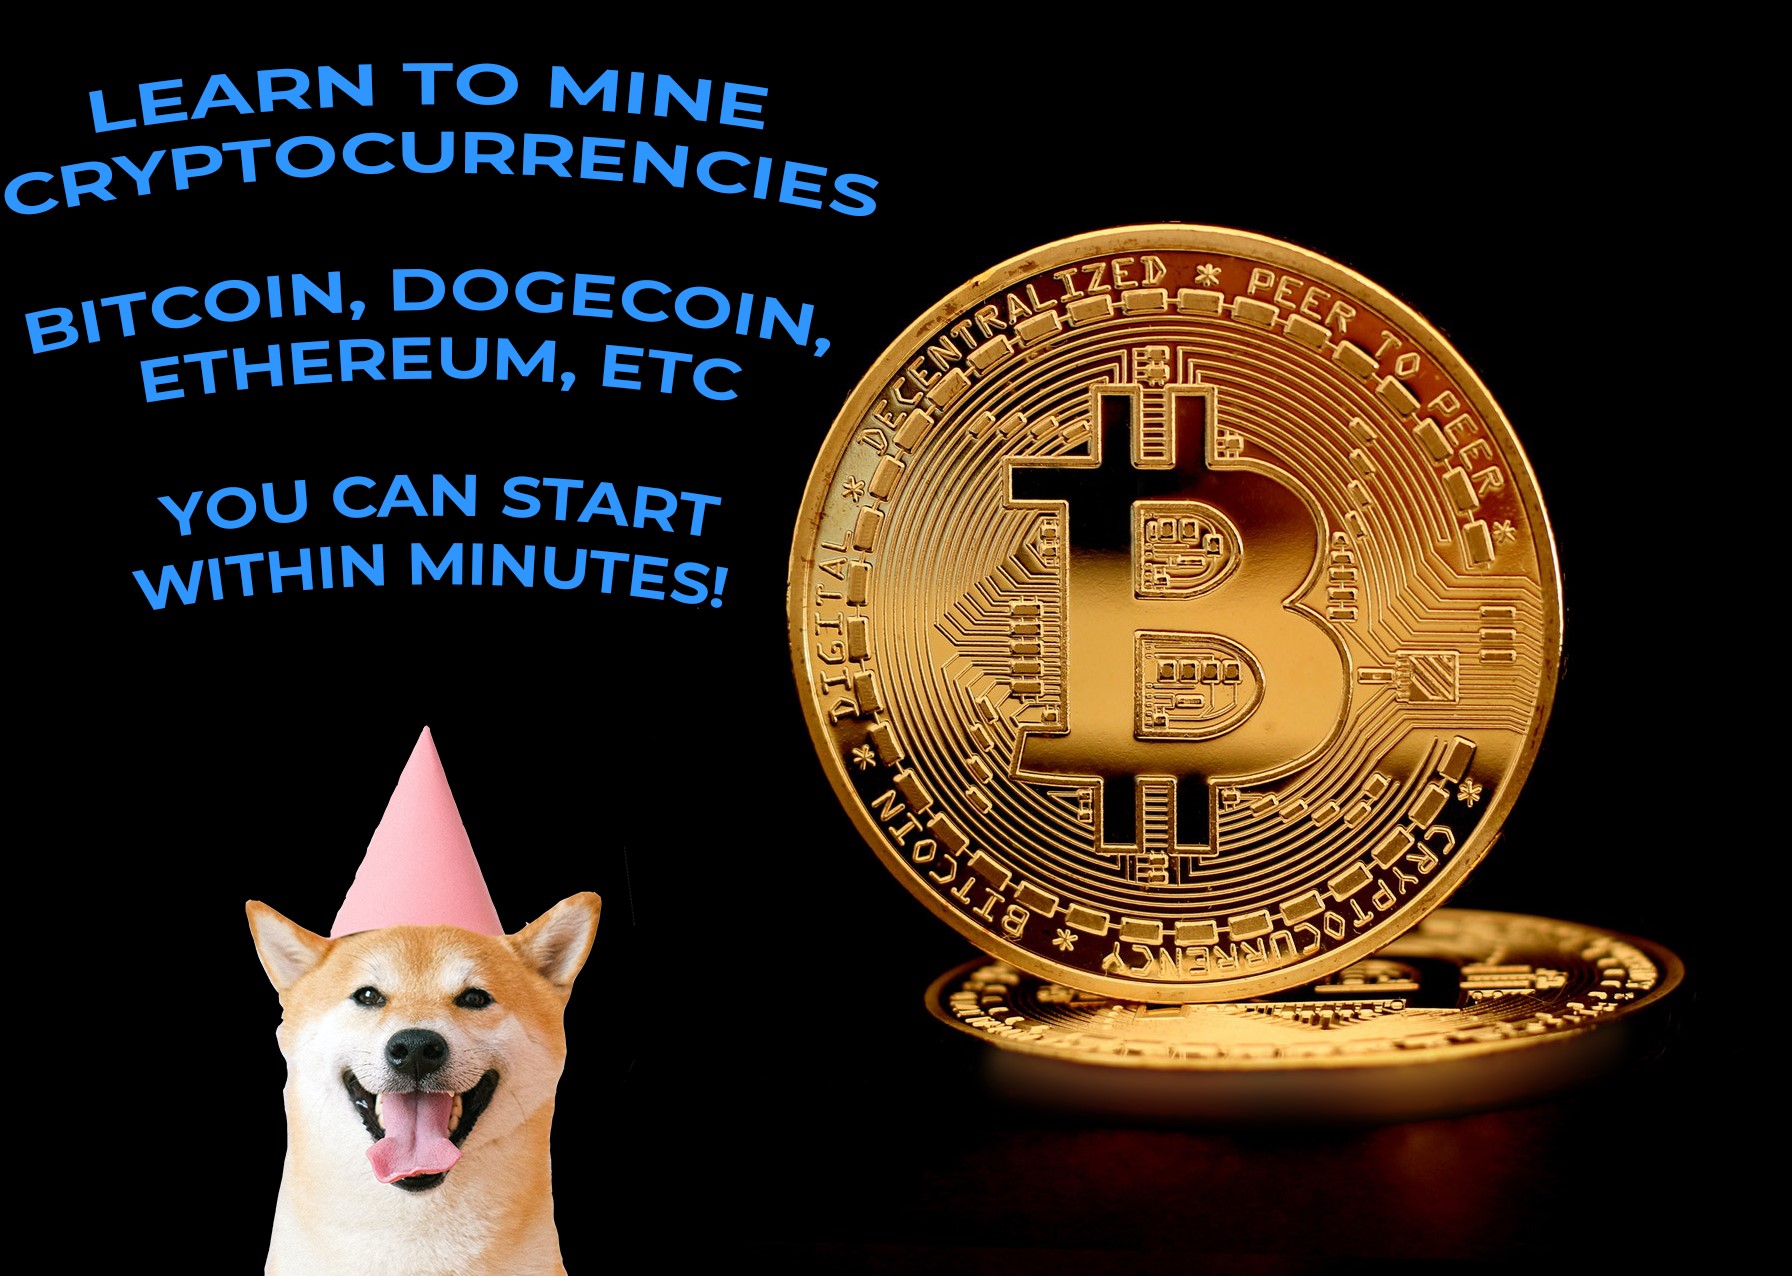 Mining bitcoin, dogecoin, ethereum